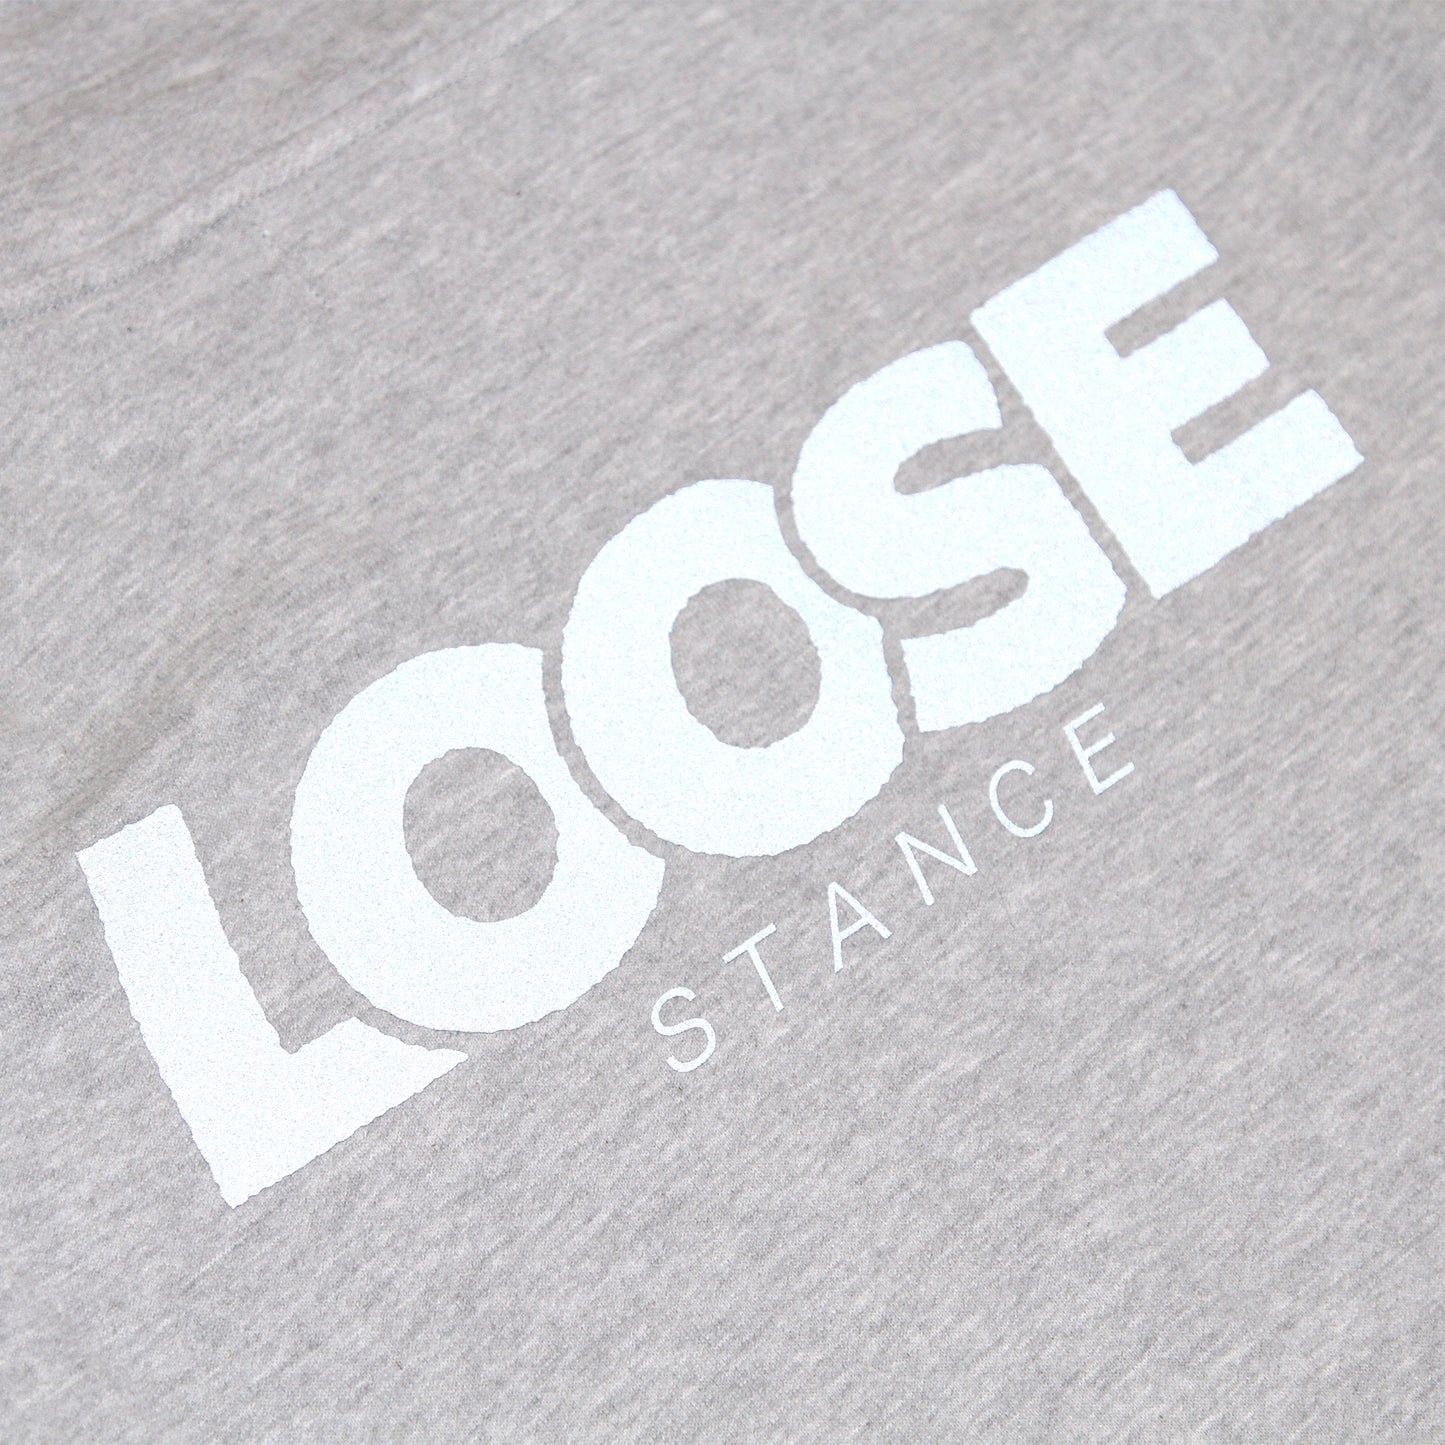 LOOSE - Half Zip Pullover Sweatshirt/Grey